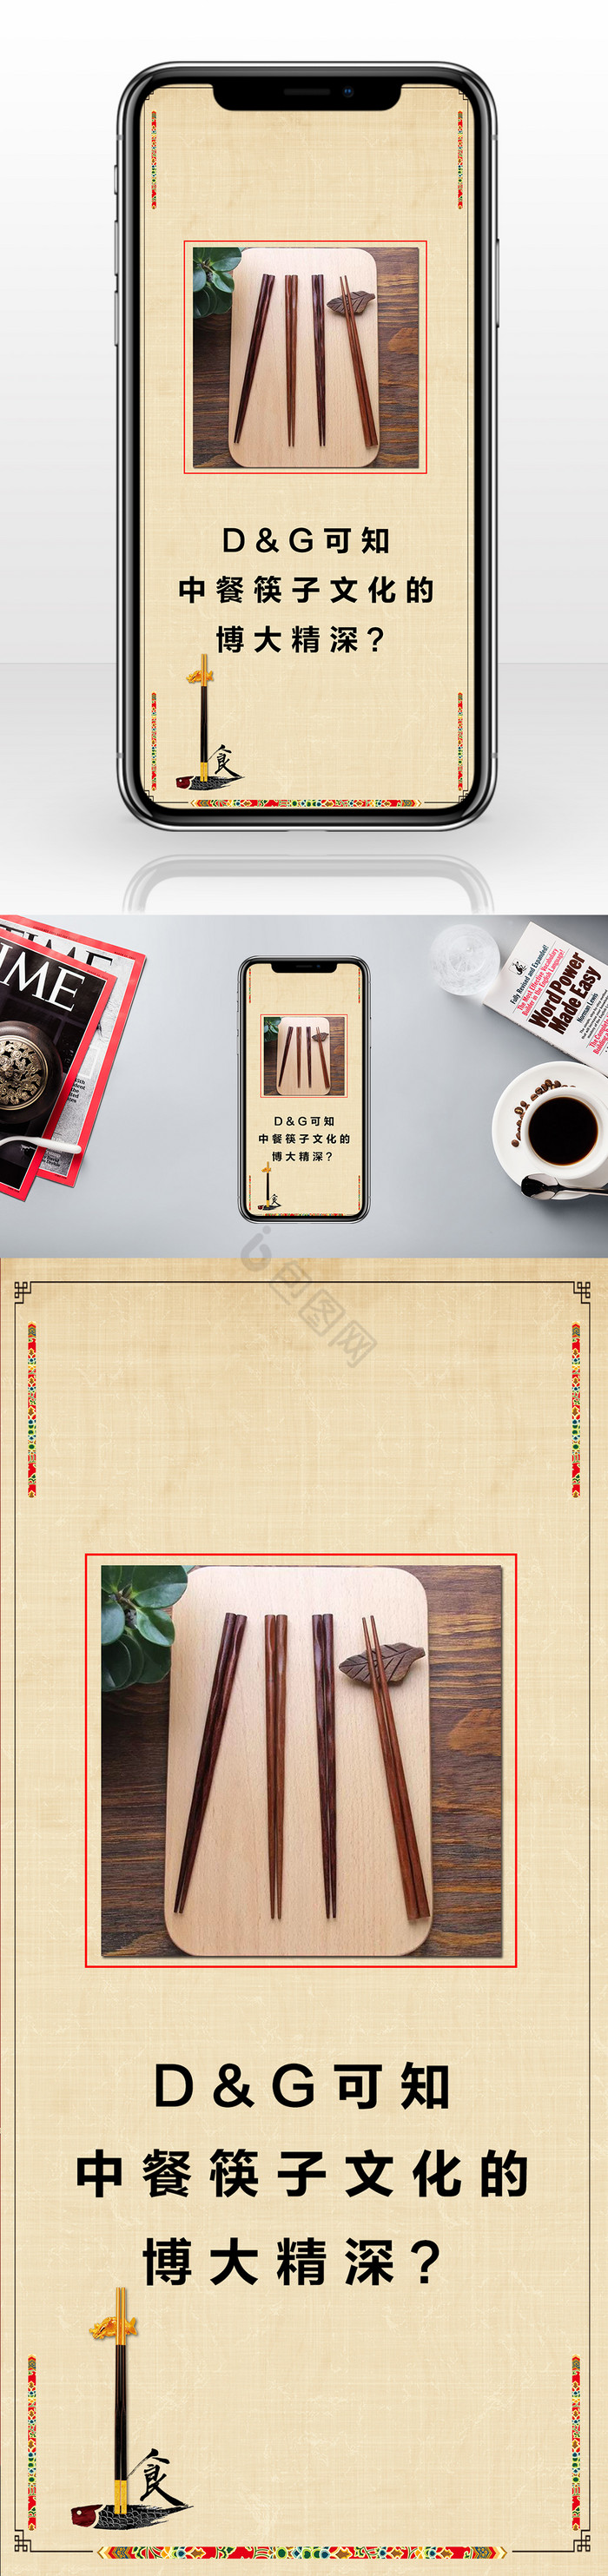 DampG可知中餐筷子文化的博大精深手机配图